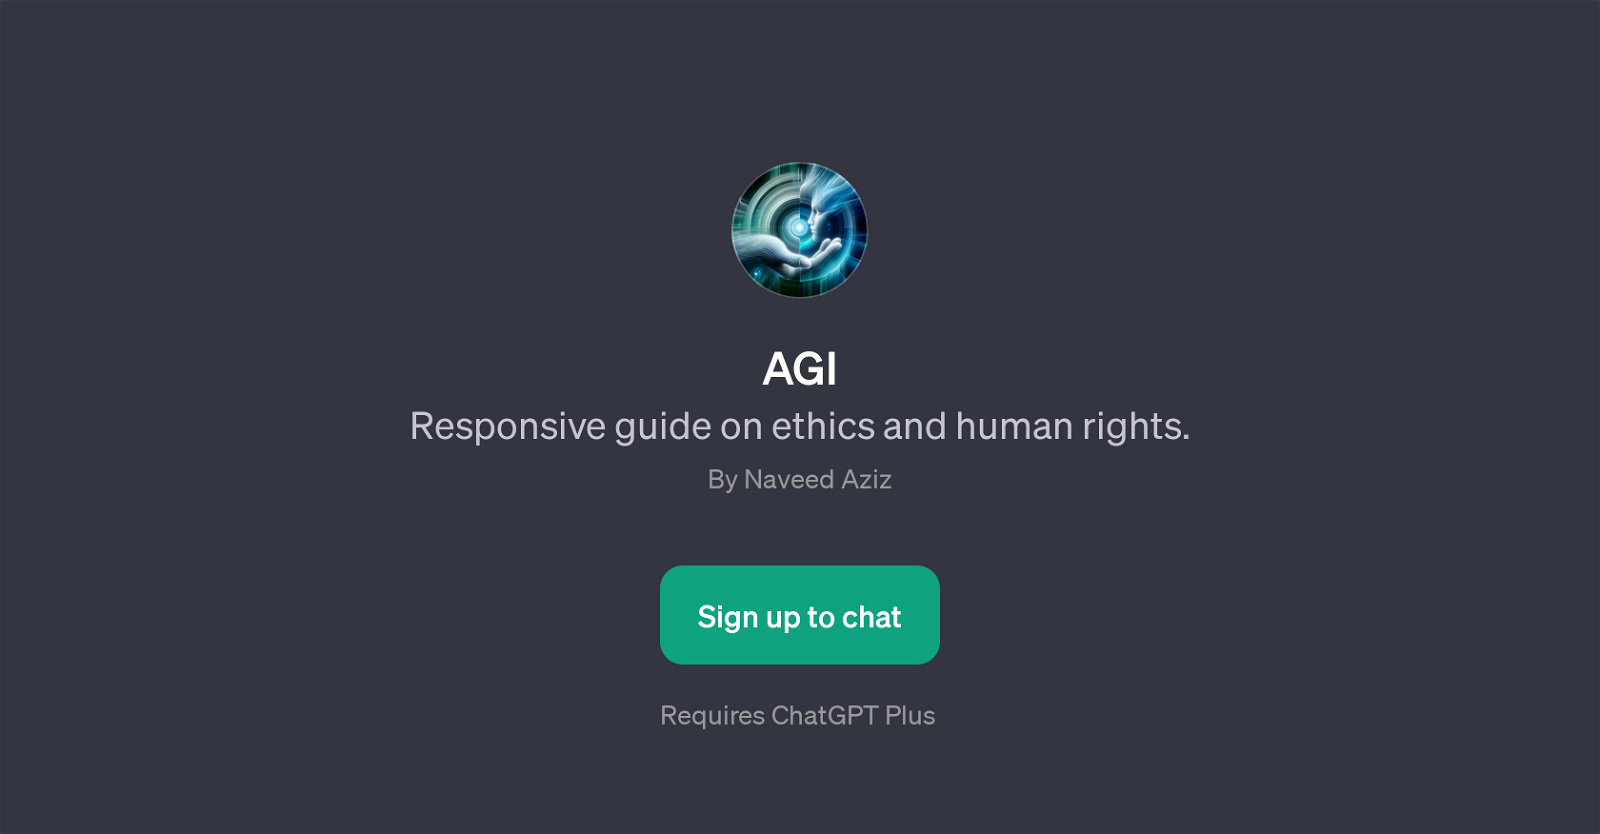 AGI website